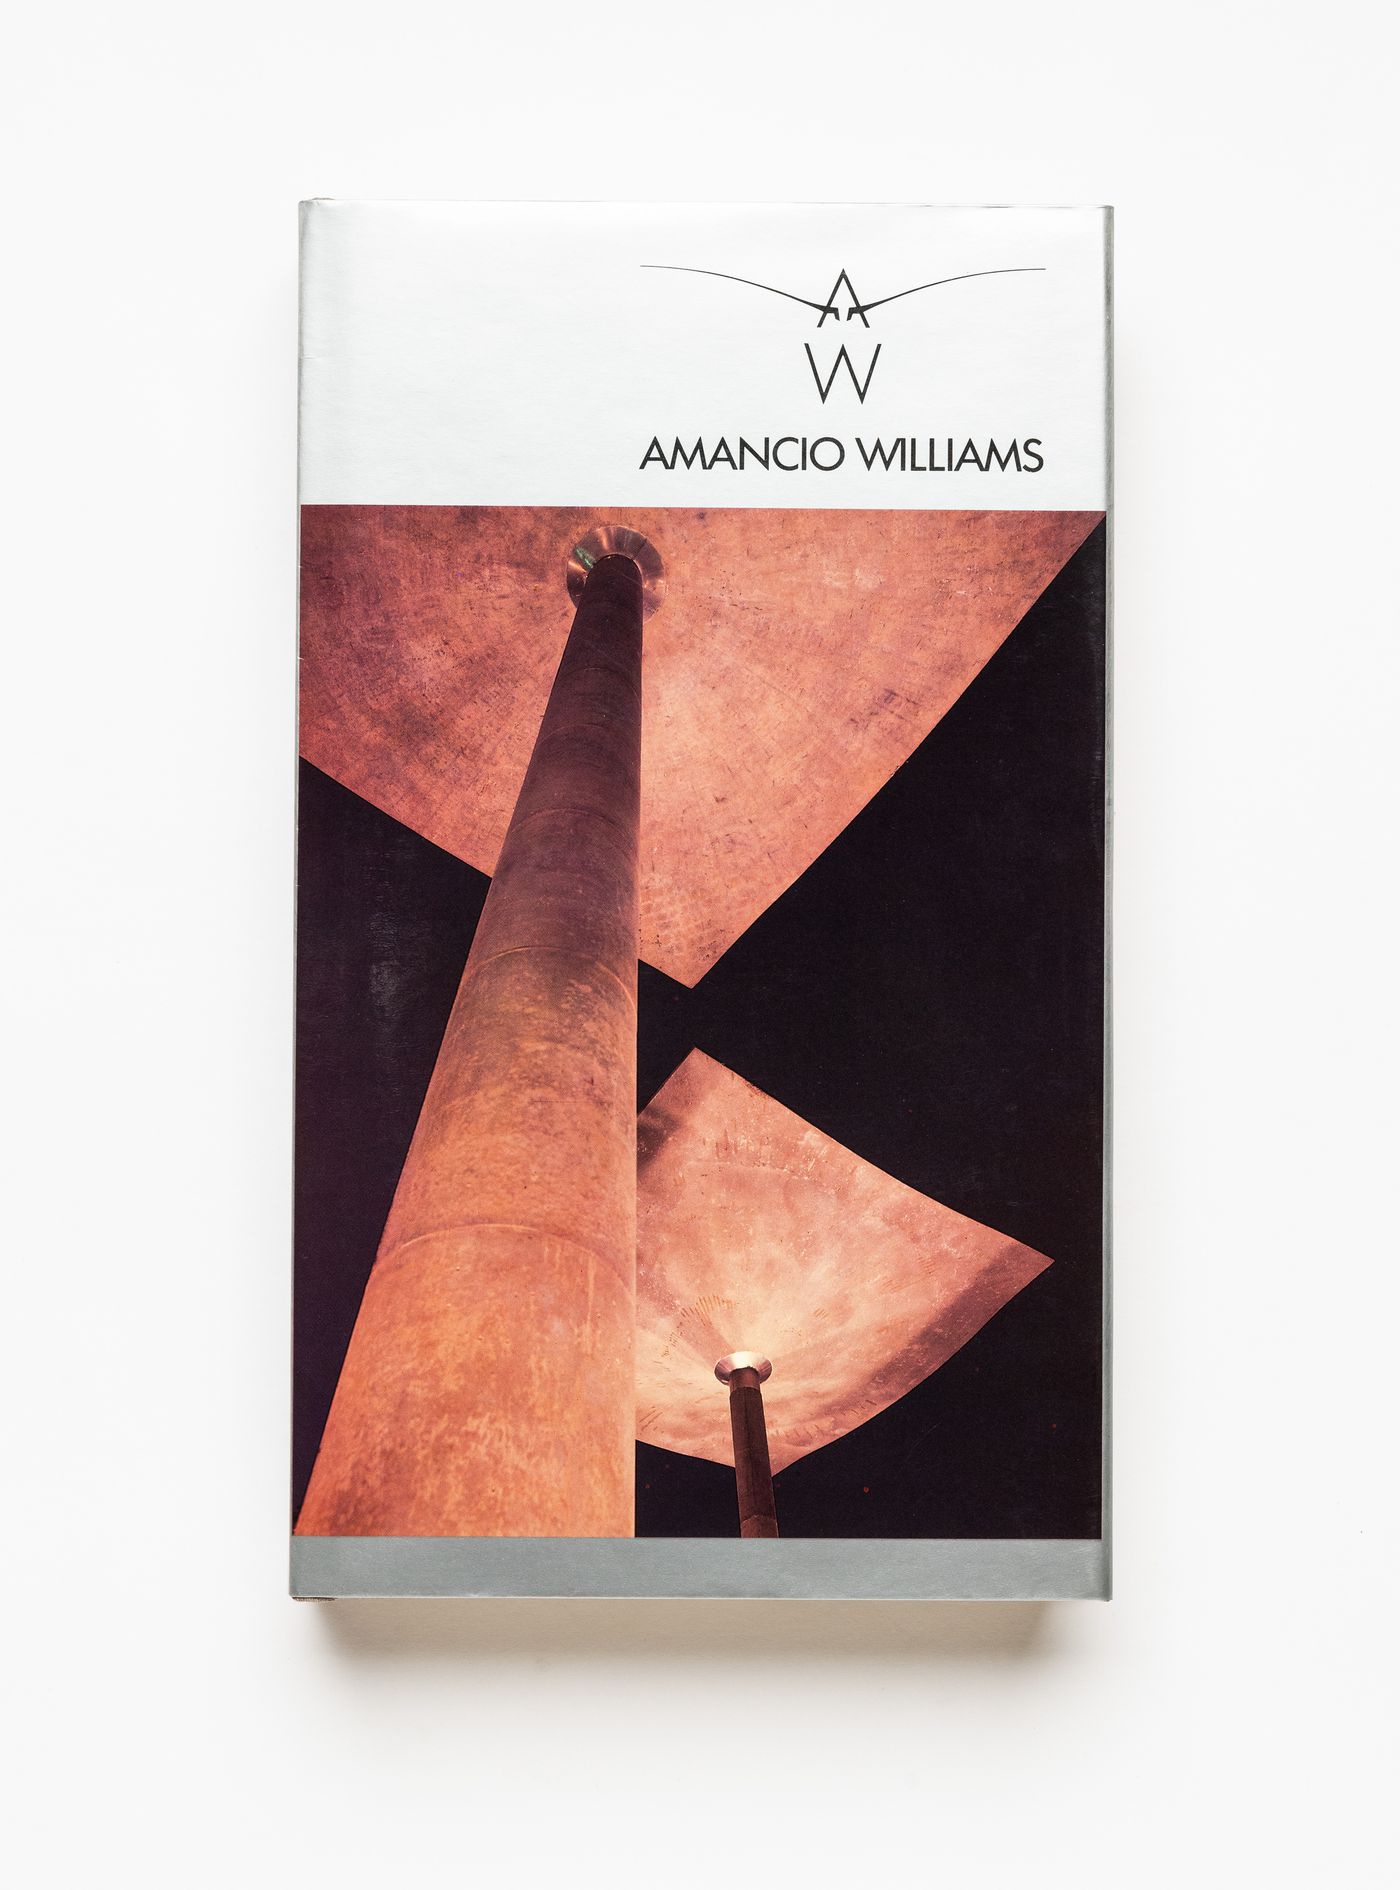 Book "Amancio Williams" by Amancio Williams